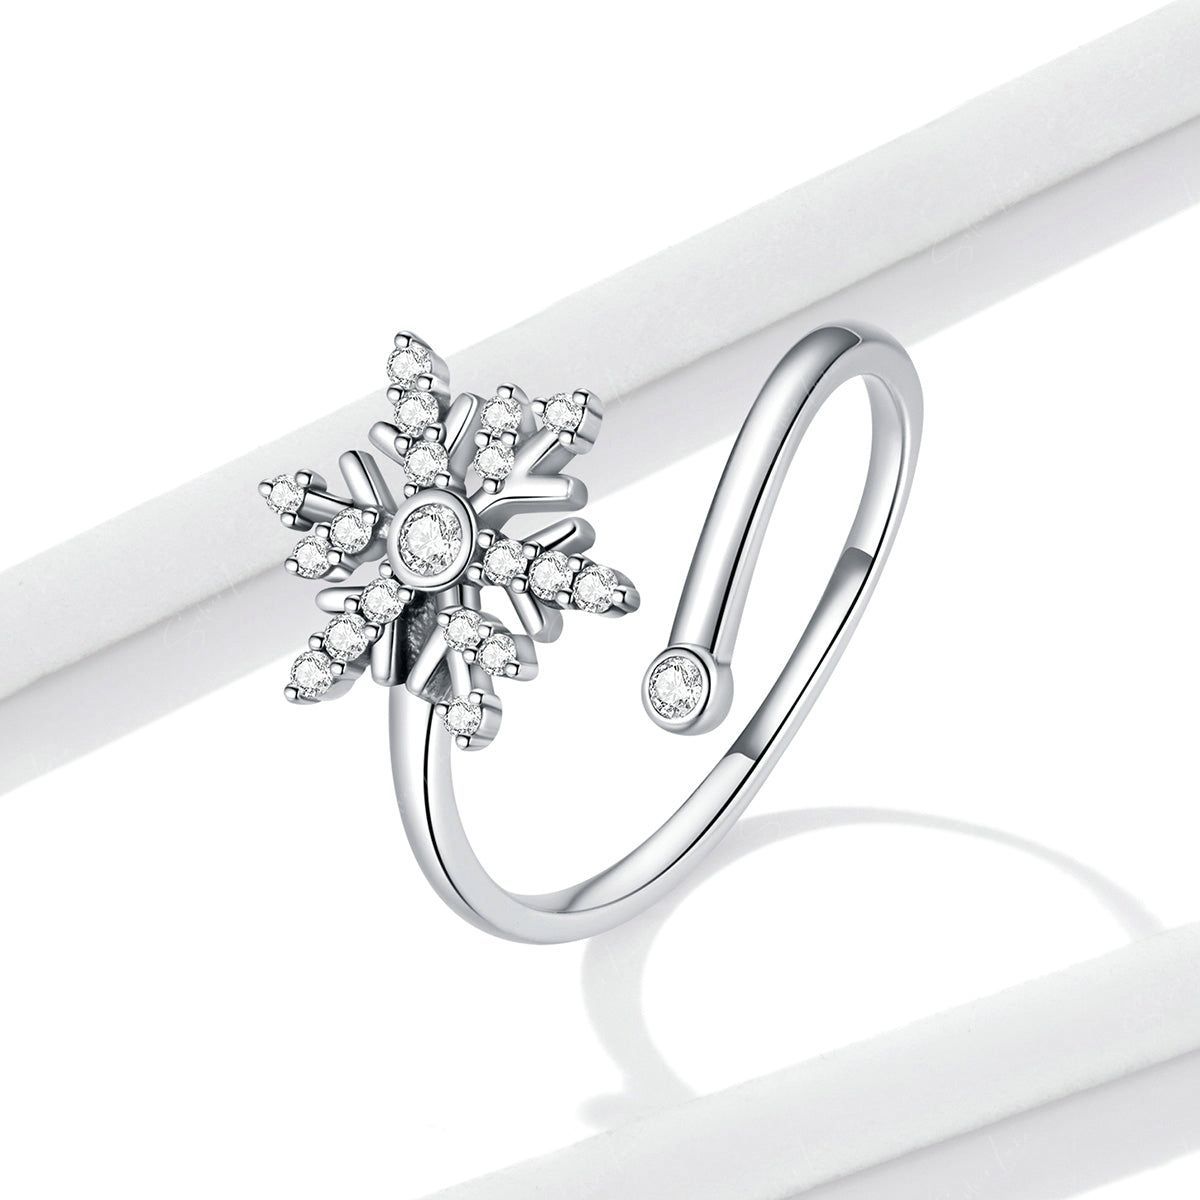 Snowflake adjustable silver ring